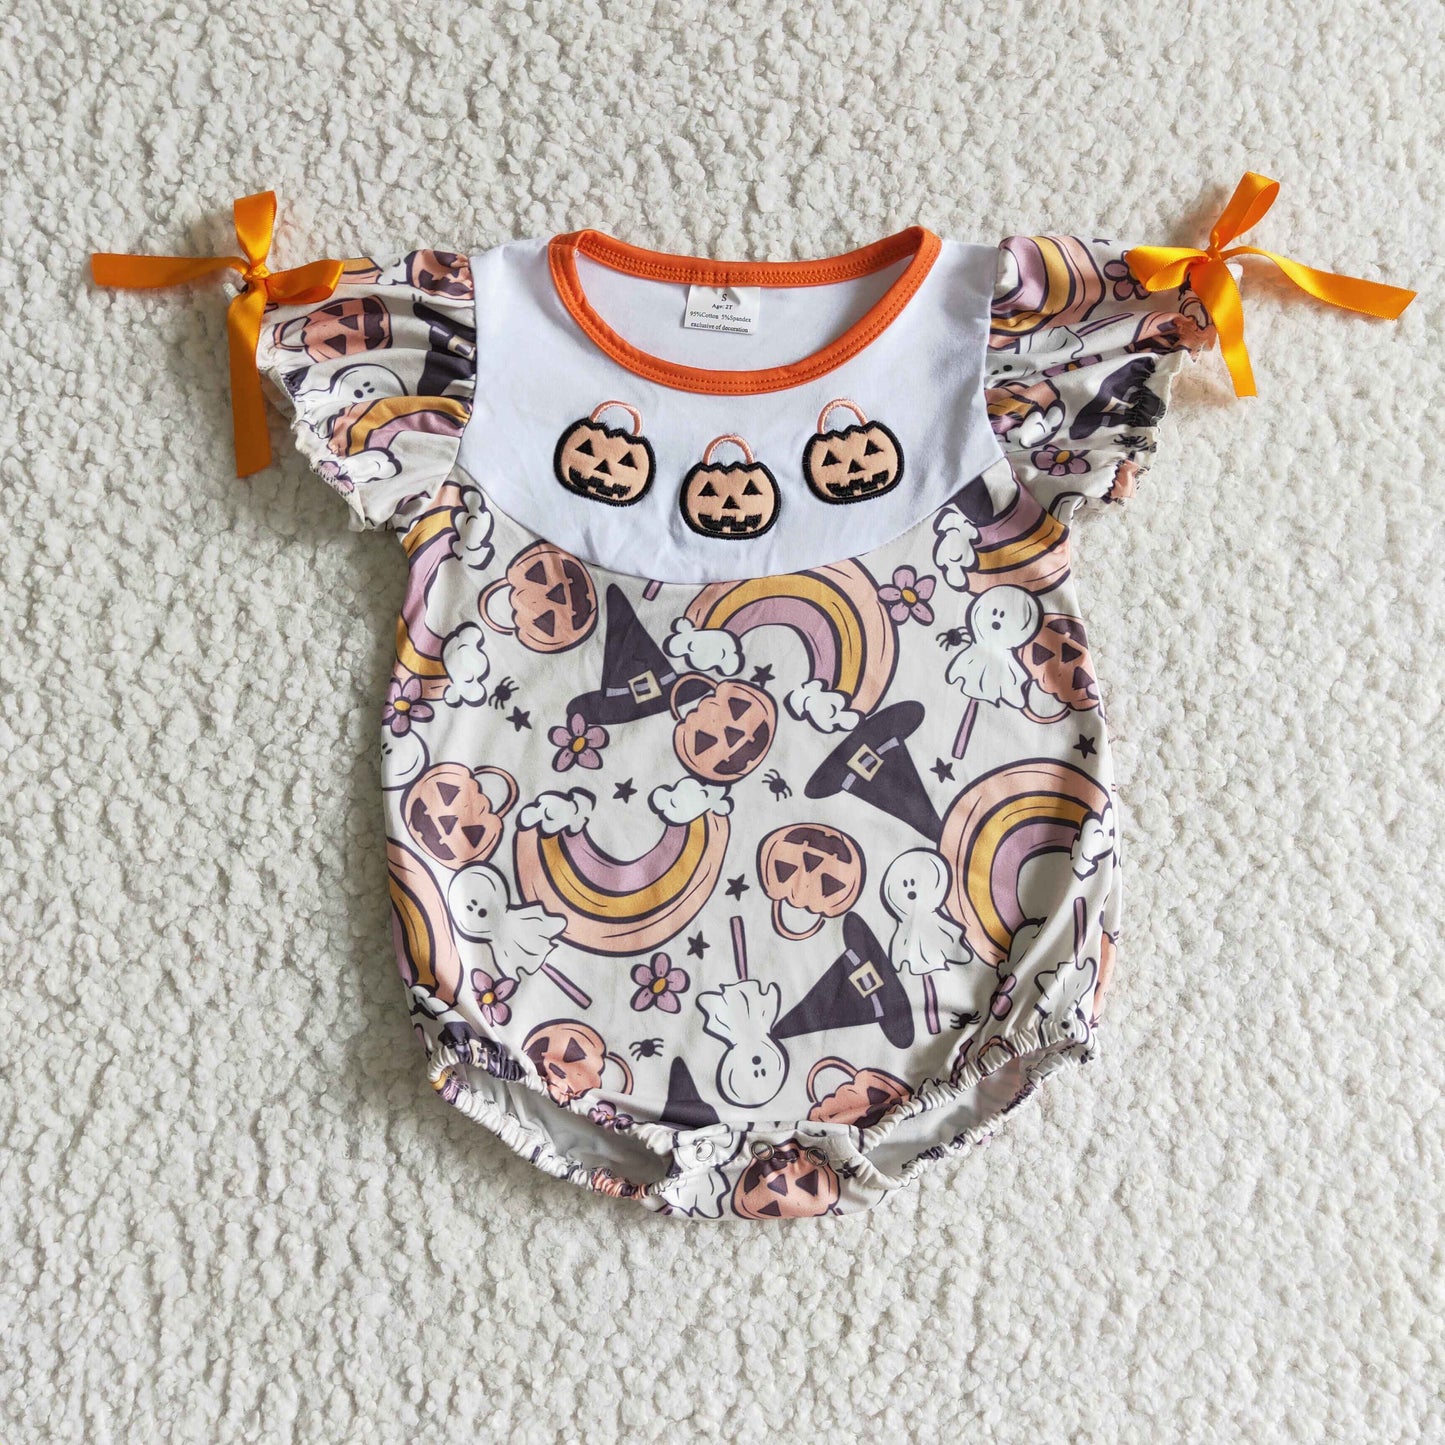 SR0086 Embroidered Pumpkin baby romper